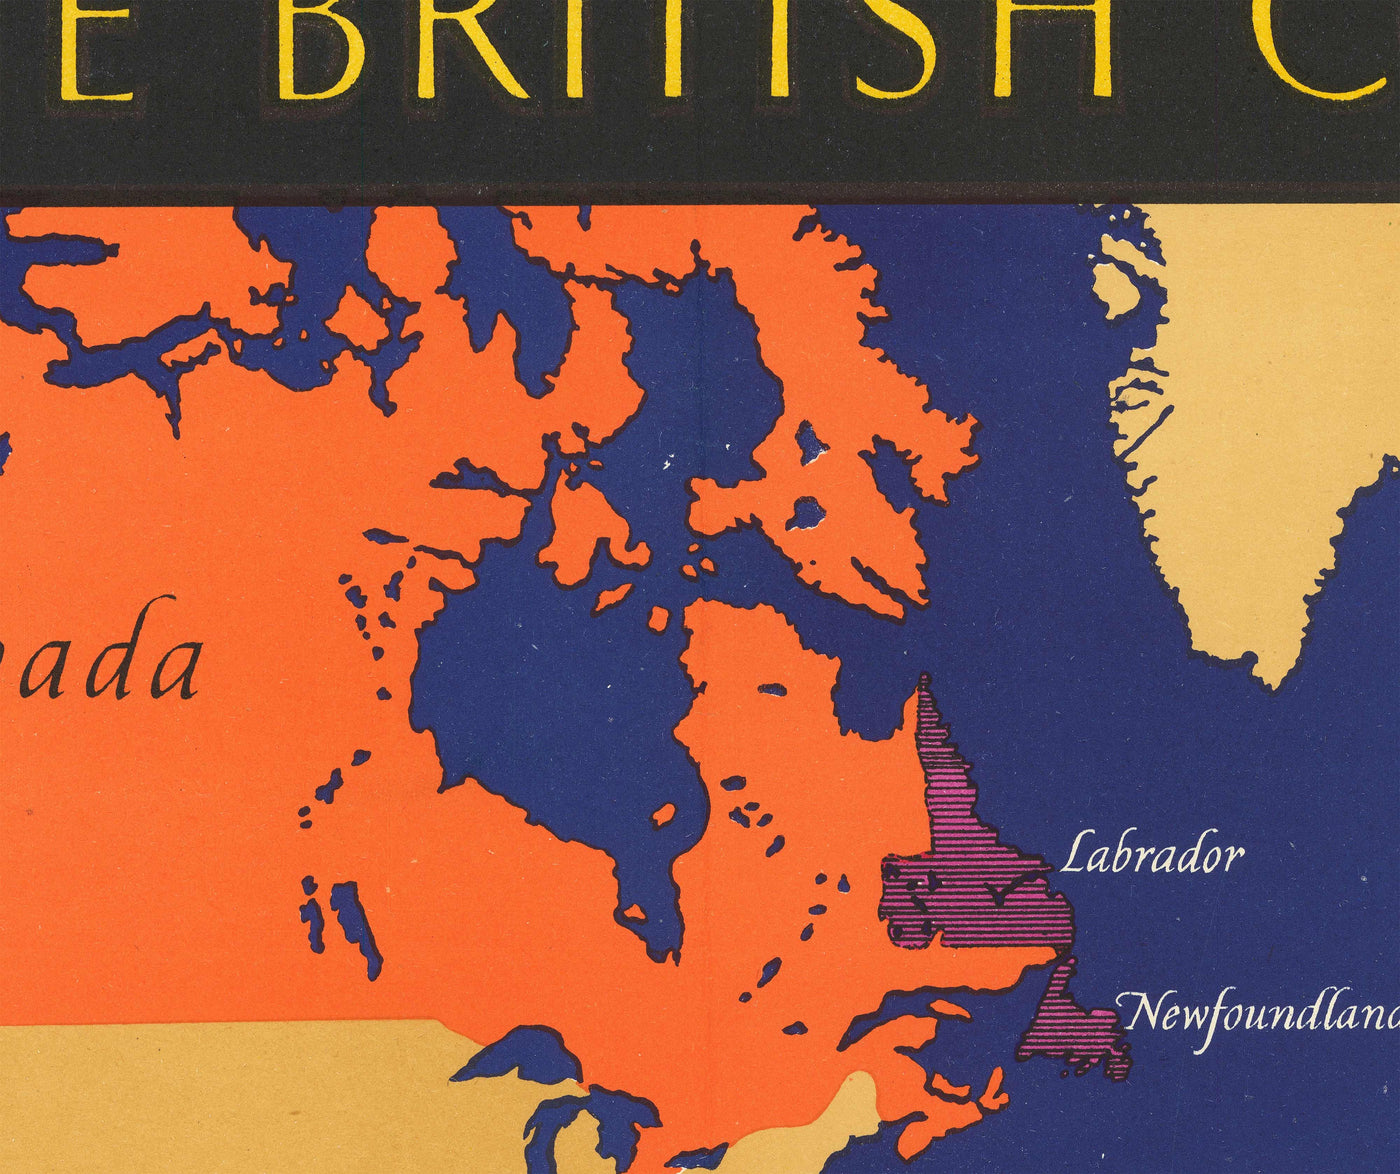 Old British Commonwealth of Nations World Map, 1942 - British Empire, UK, Canada, Australia, Dominions, India, Africa